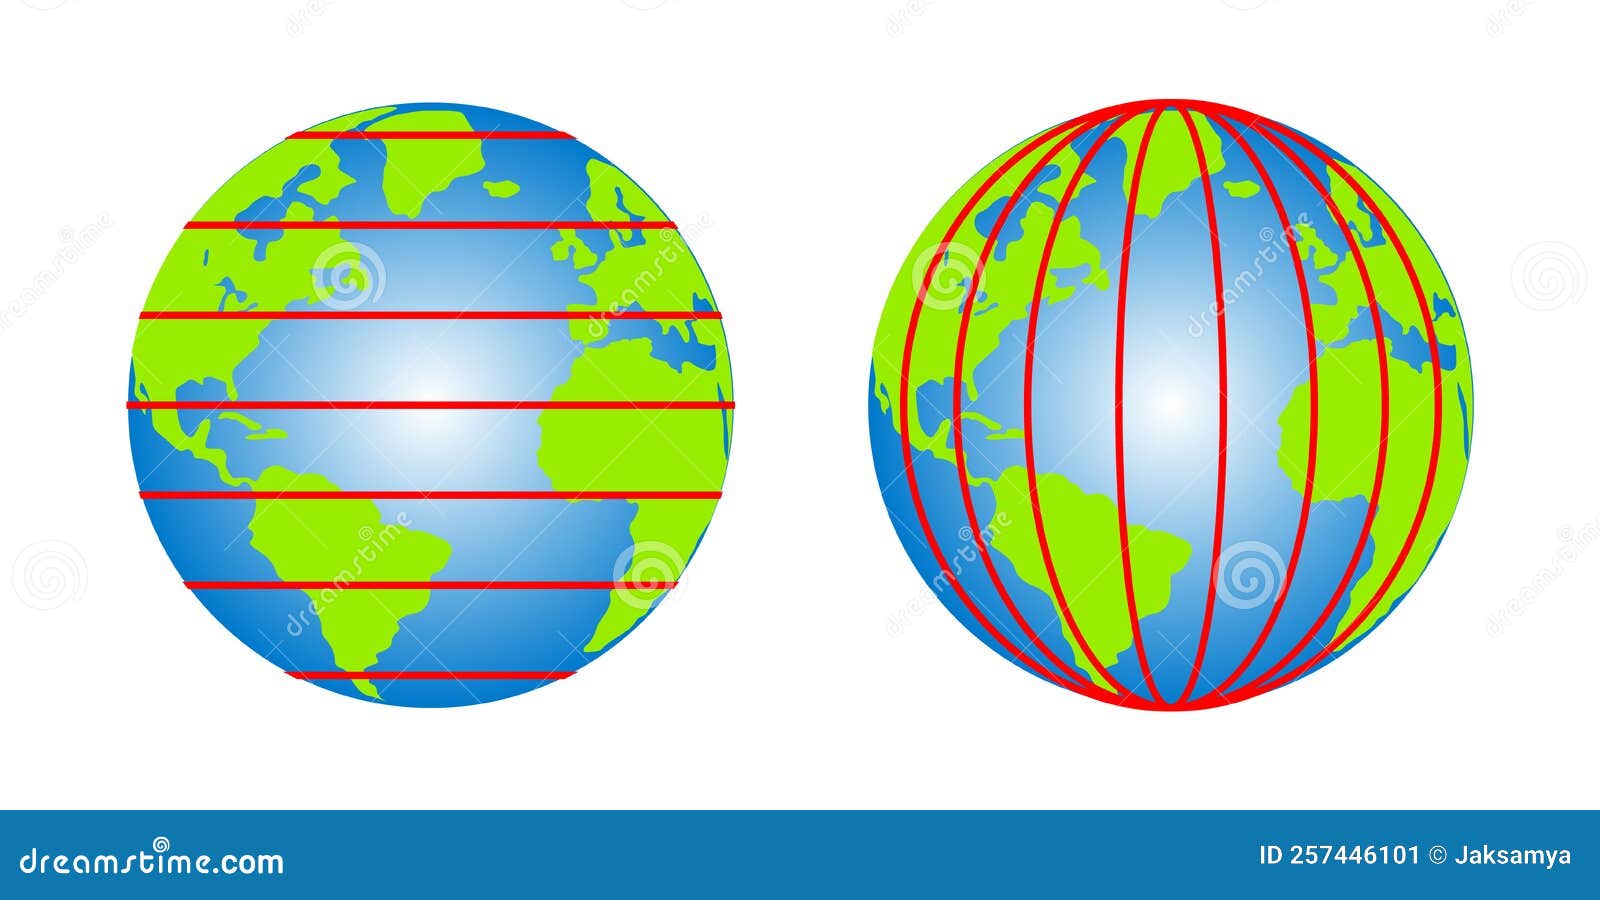 latitude and longitude diagram of earth